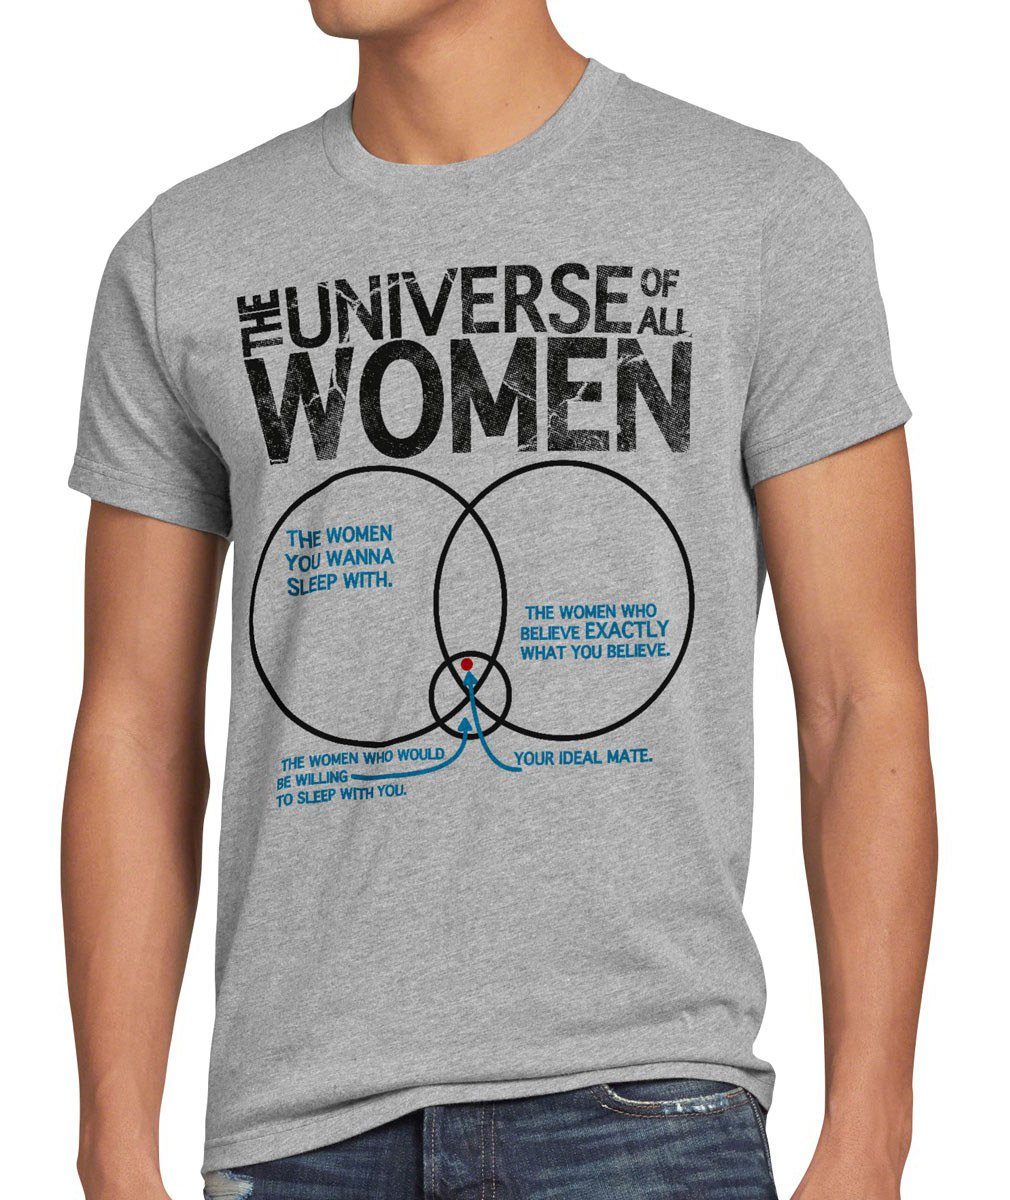 style3 Print-Shirt Herren date cooper big bang T-Shirt meliert Women grau leonard Universe of theory The sheldon